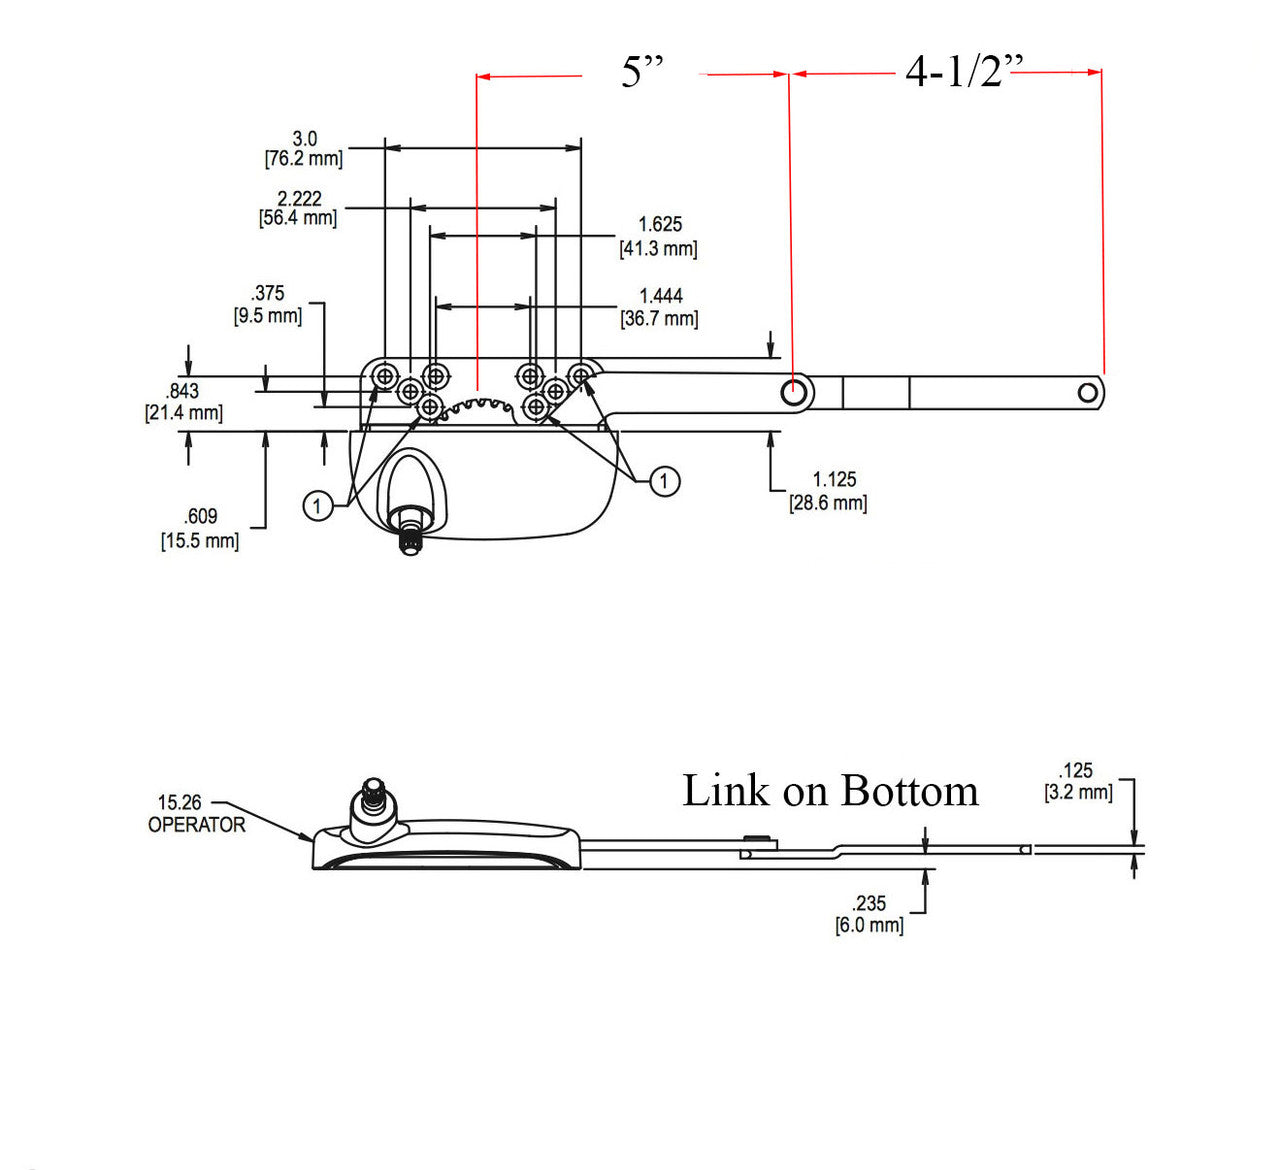 Truth Ellipse Split Arm Casement Operator, 1/4" Offset Link, Right Hand